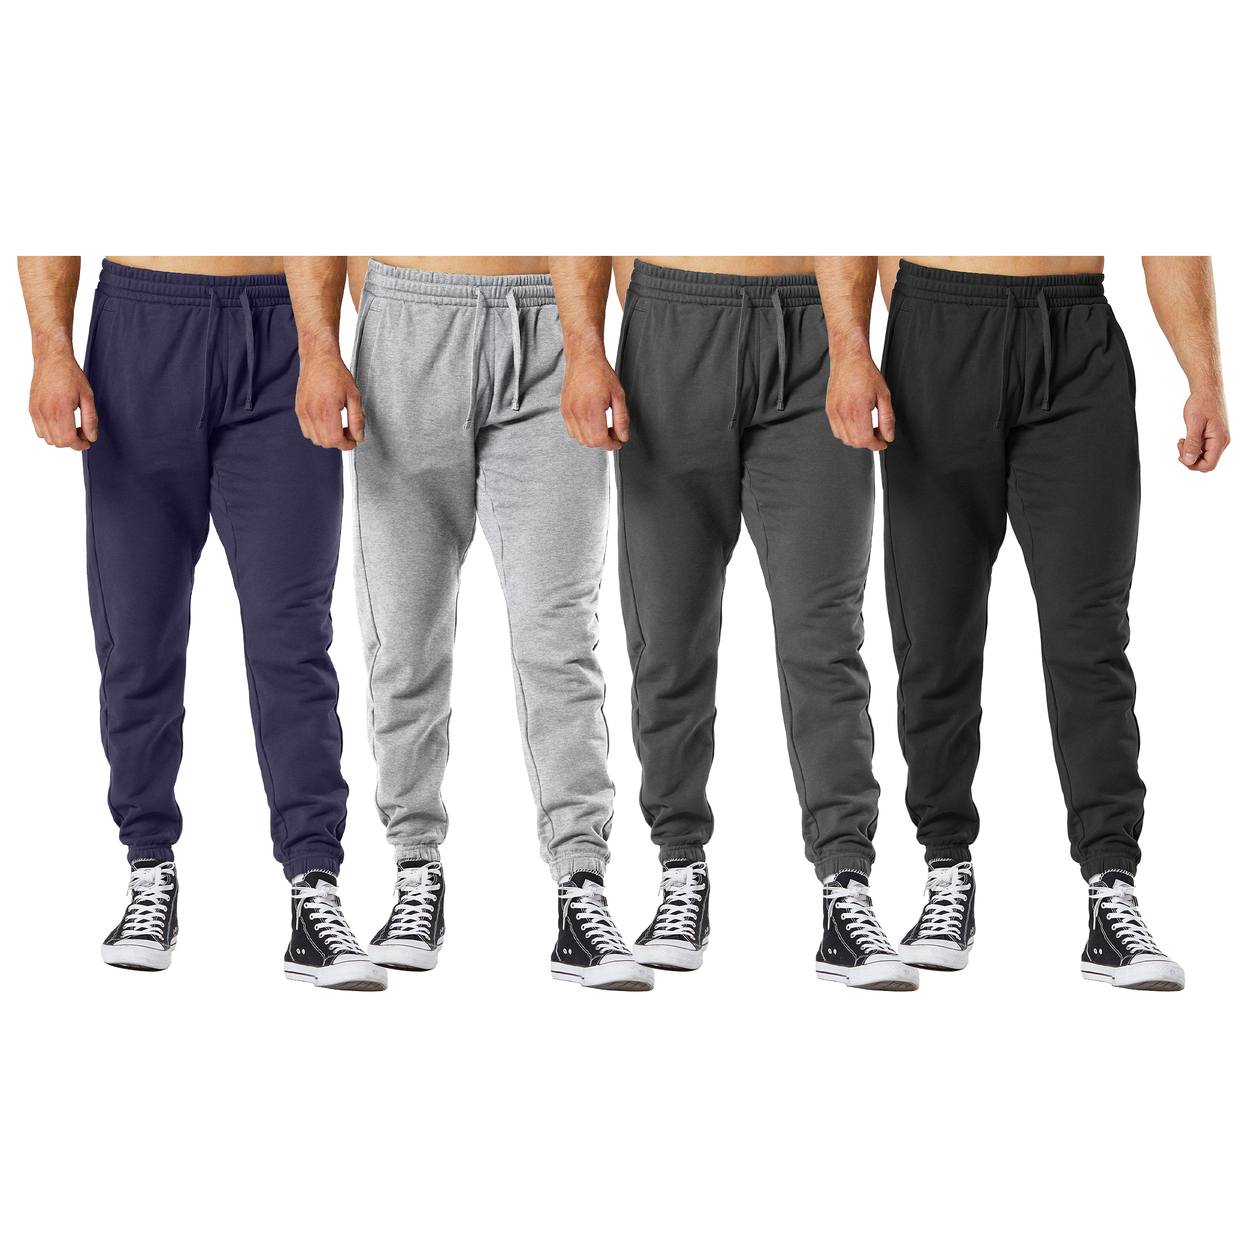 Men's Ultra-Soft Cozy Winter Warm Casual Fleece Lined Sweatpants Jogger - Grey, X-large